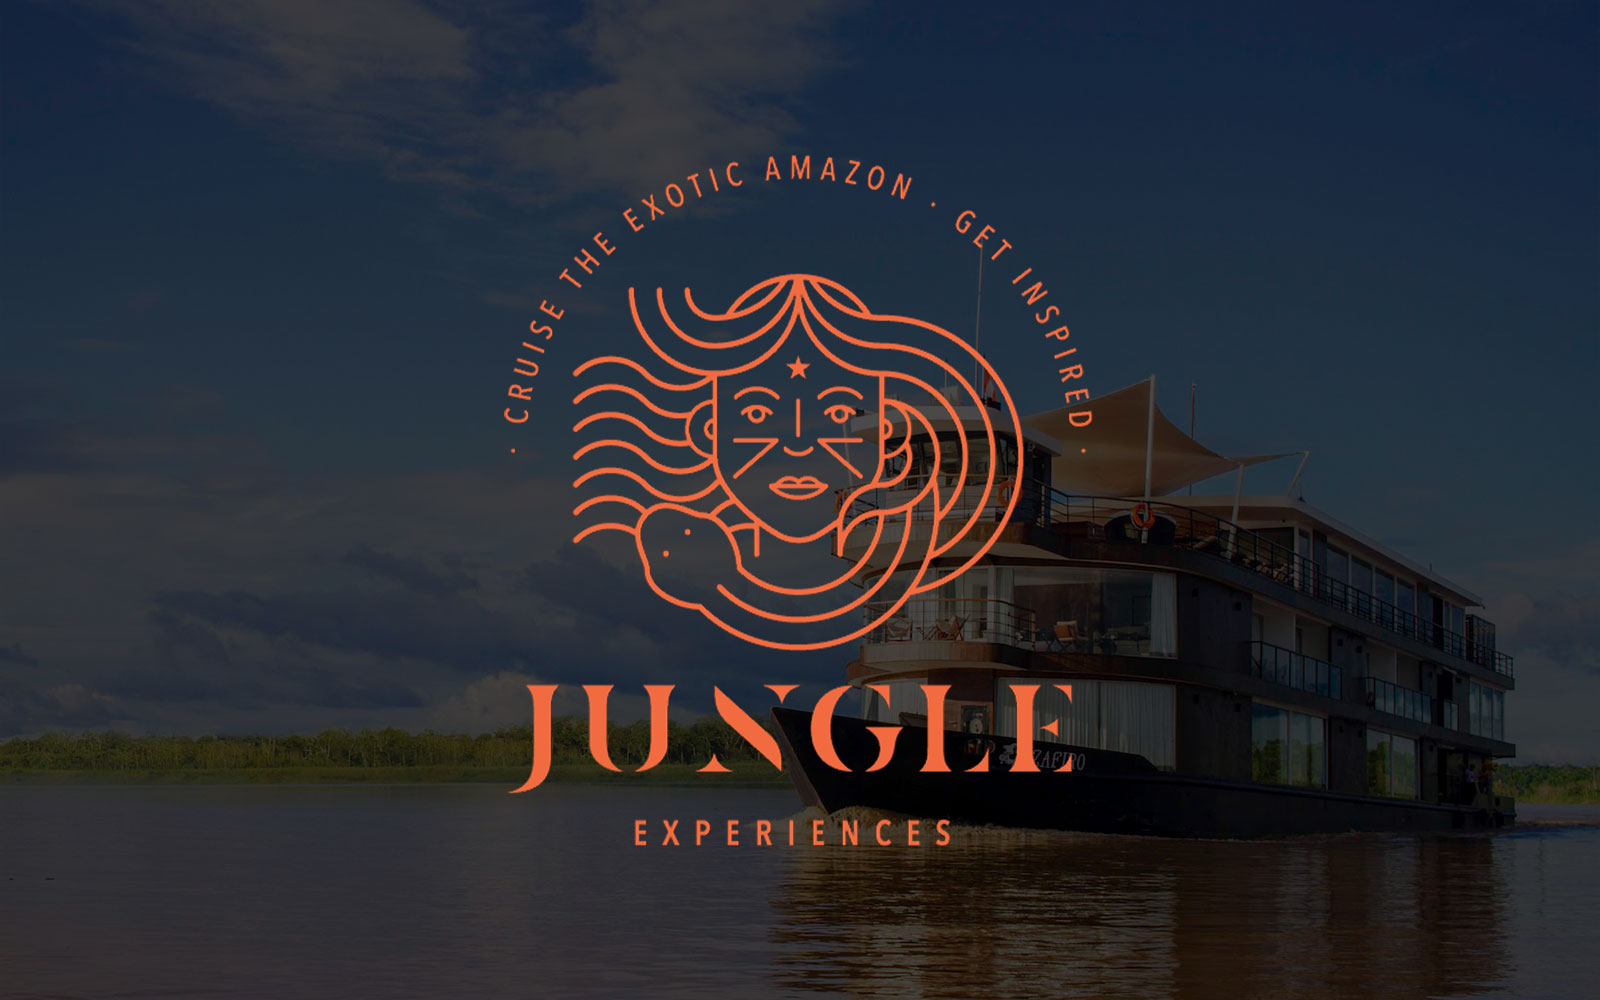 Jungle Experiences